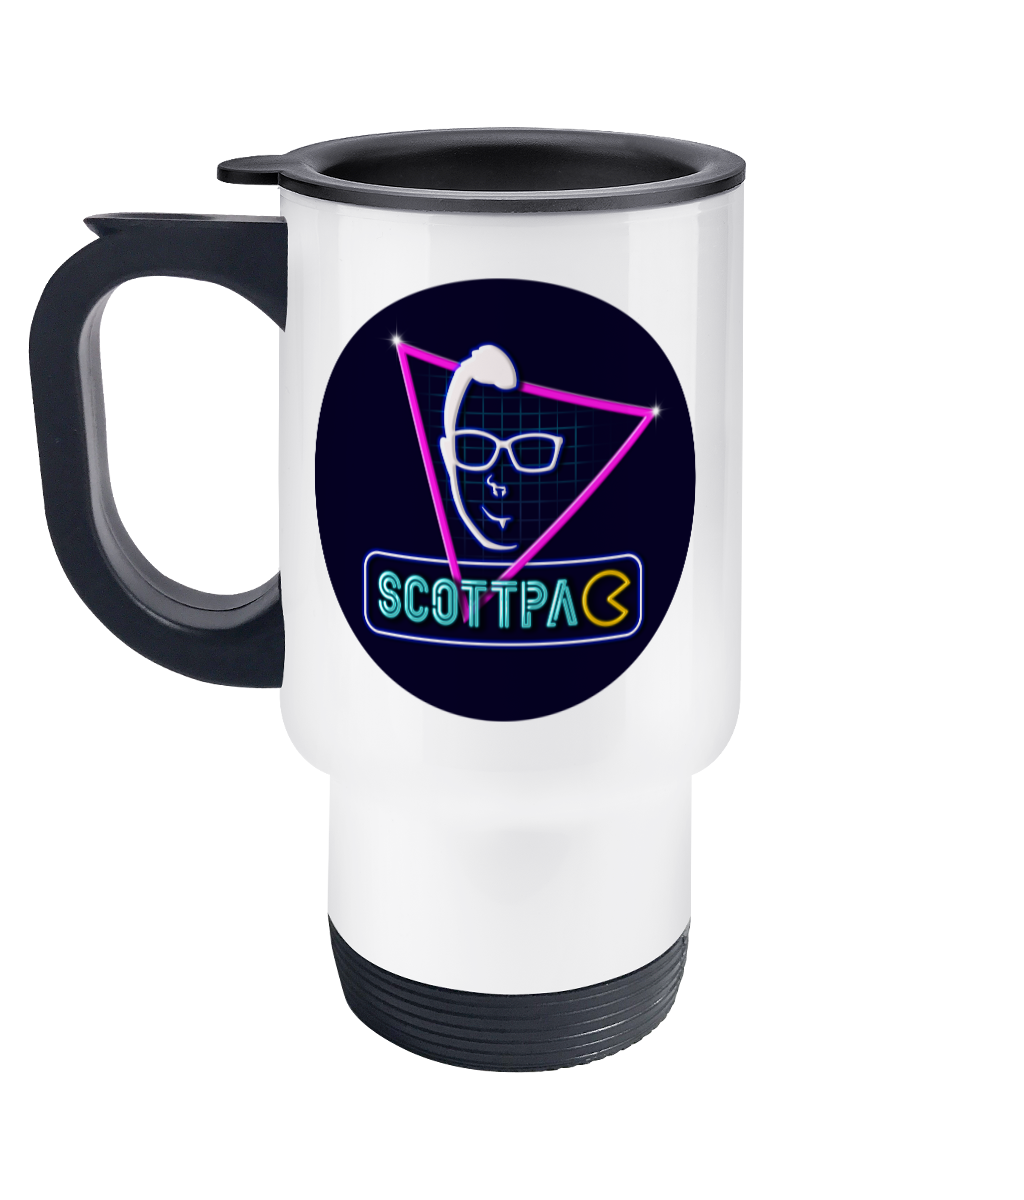 Scottpac Travel Mug mug